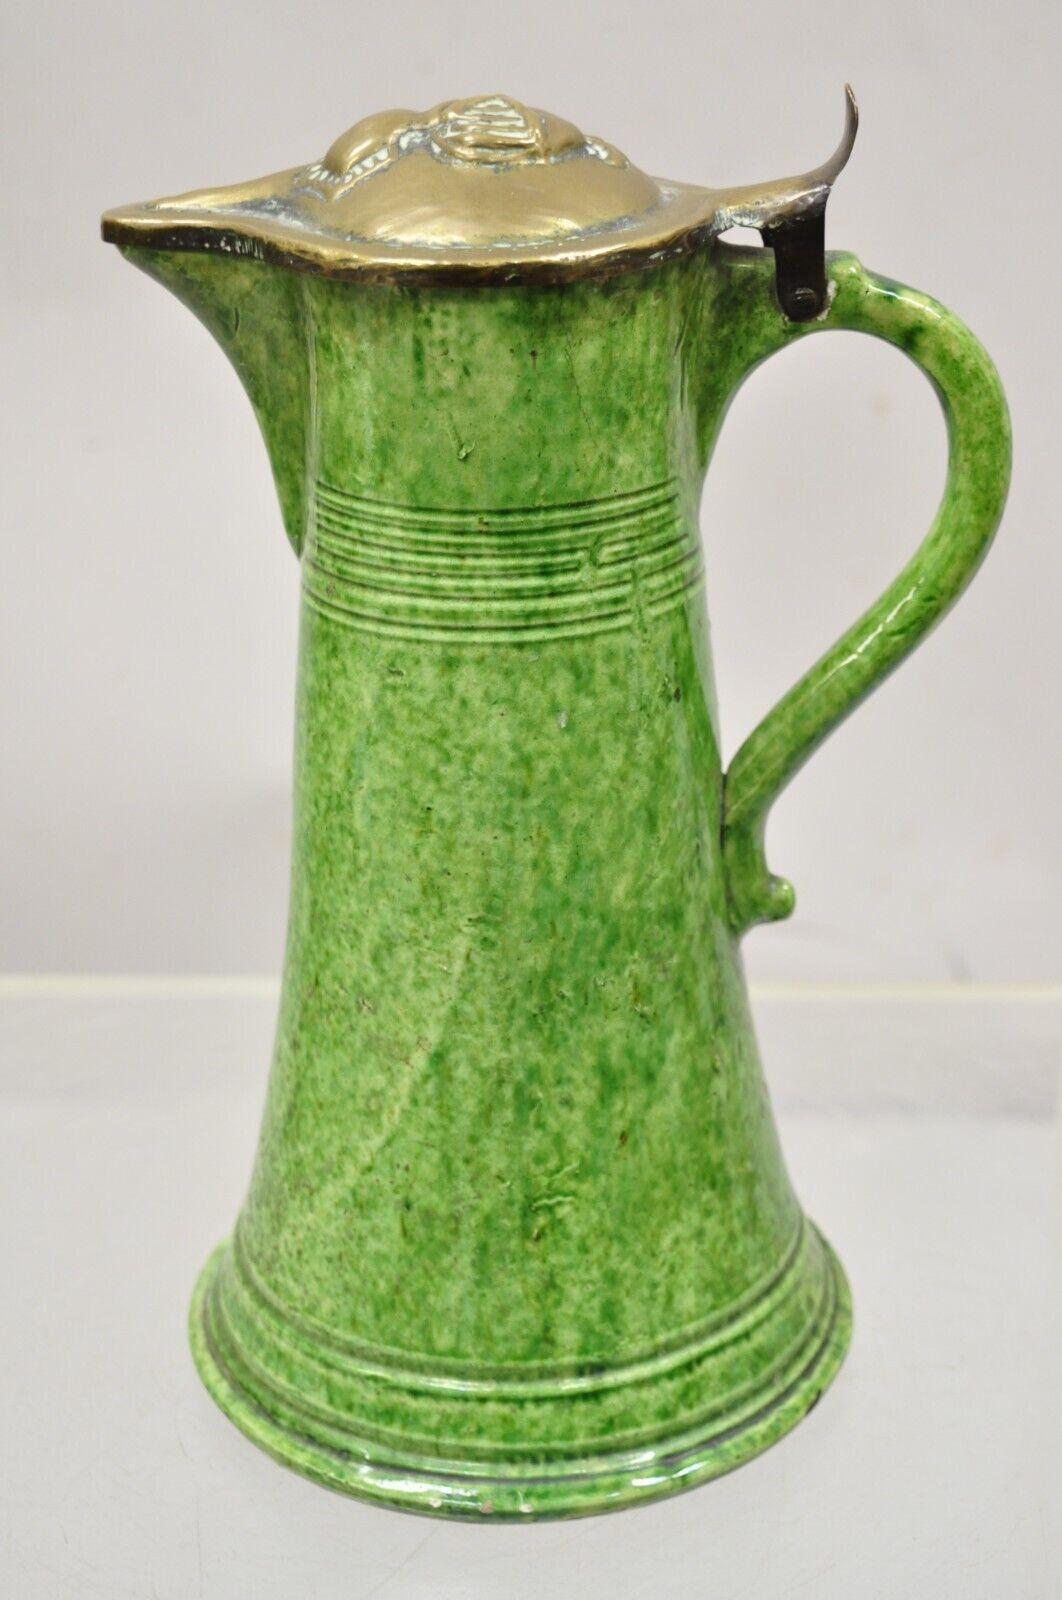 Antique Green Ceramic Gothic Renaissance Pitcher with Brass Soldier Armor Lid. Circa 19th Century. Measurements: 12